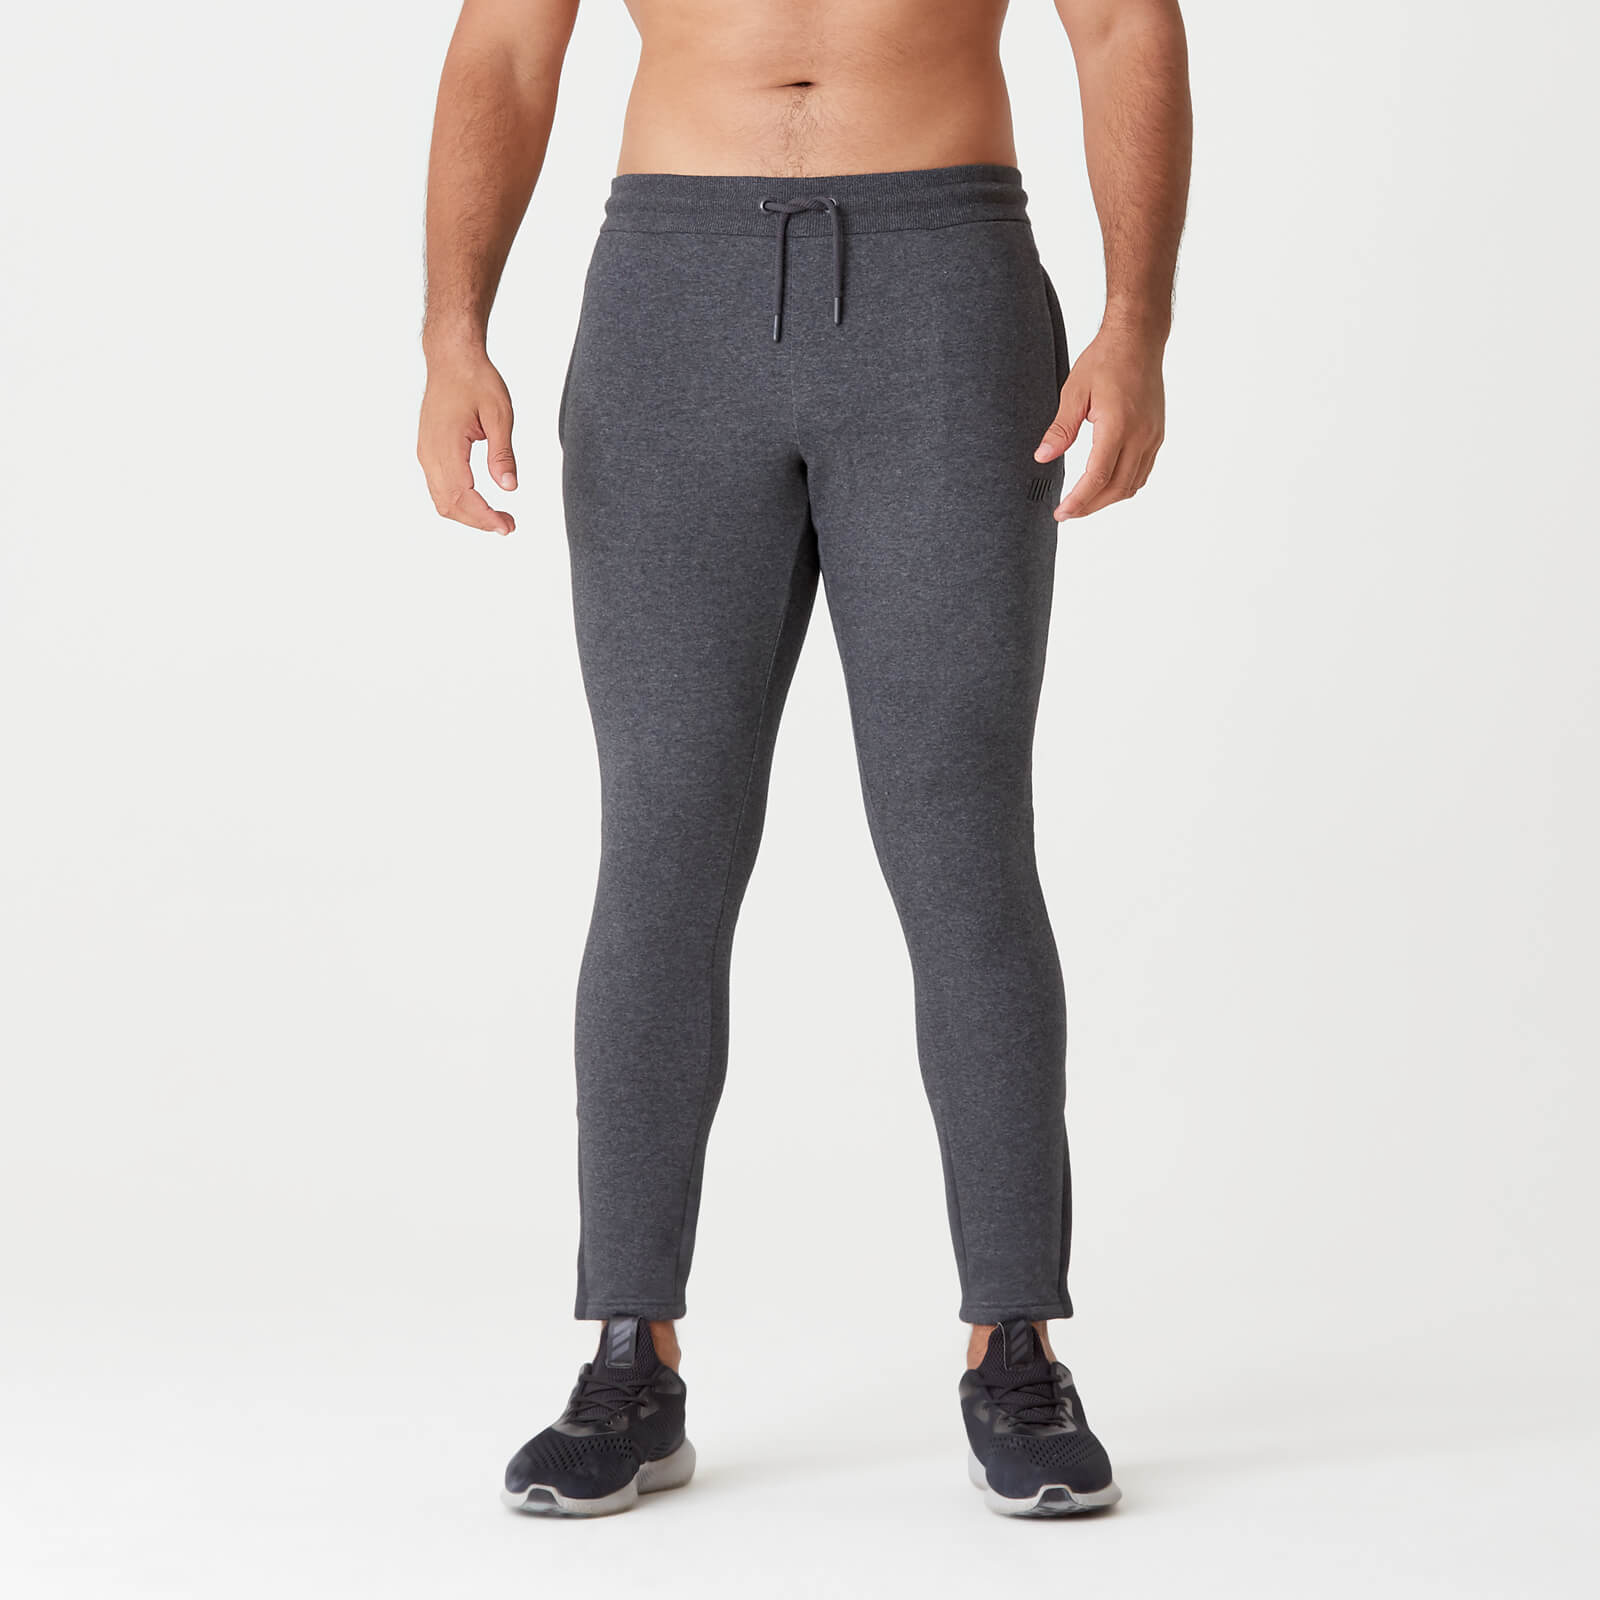 Tru-Fit joggers hlače 2.0 - Tamno sive - S